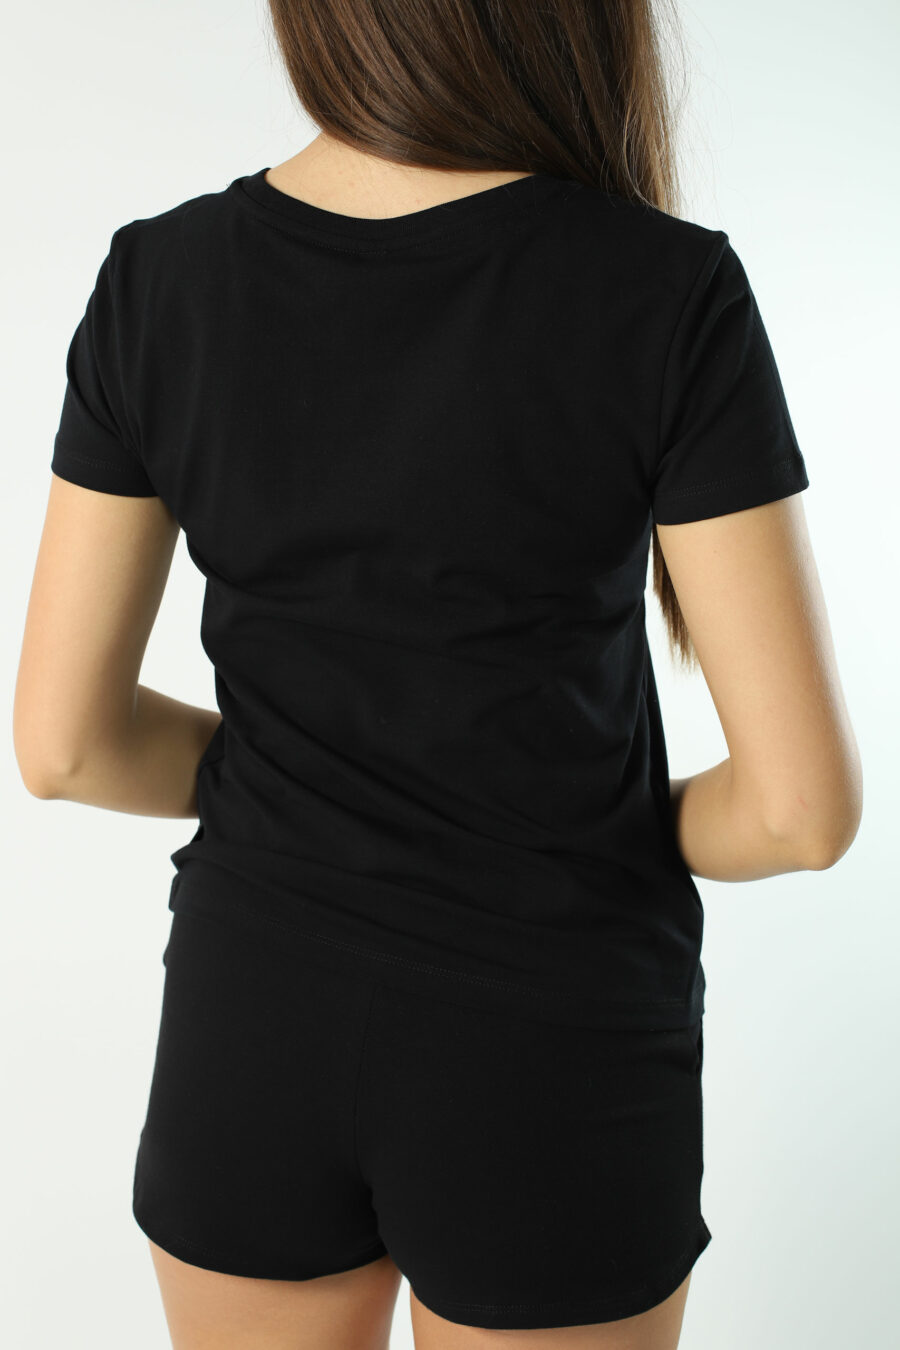 Camiseta negra slim fit con logo oso underbear - Photos 2852